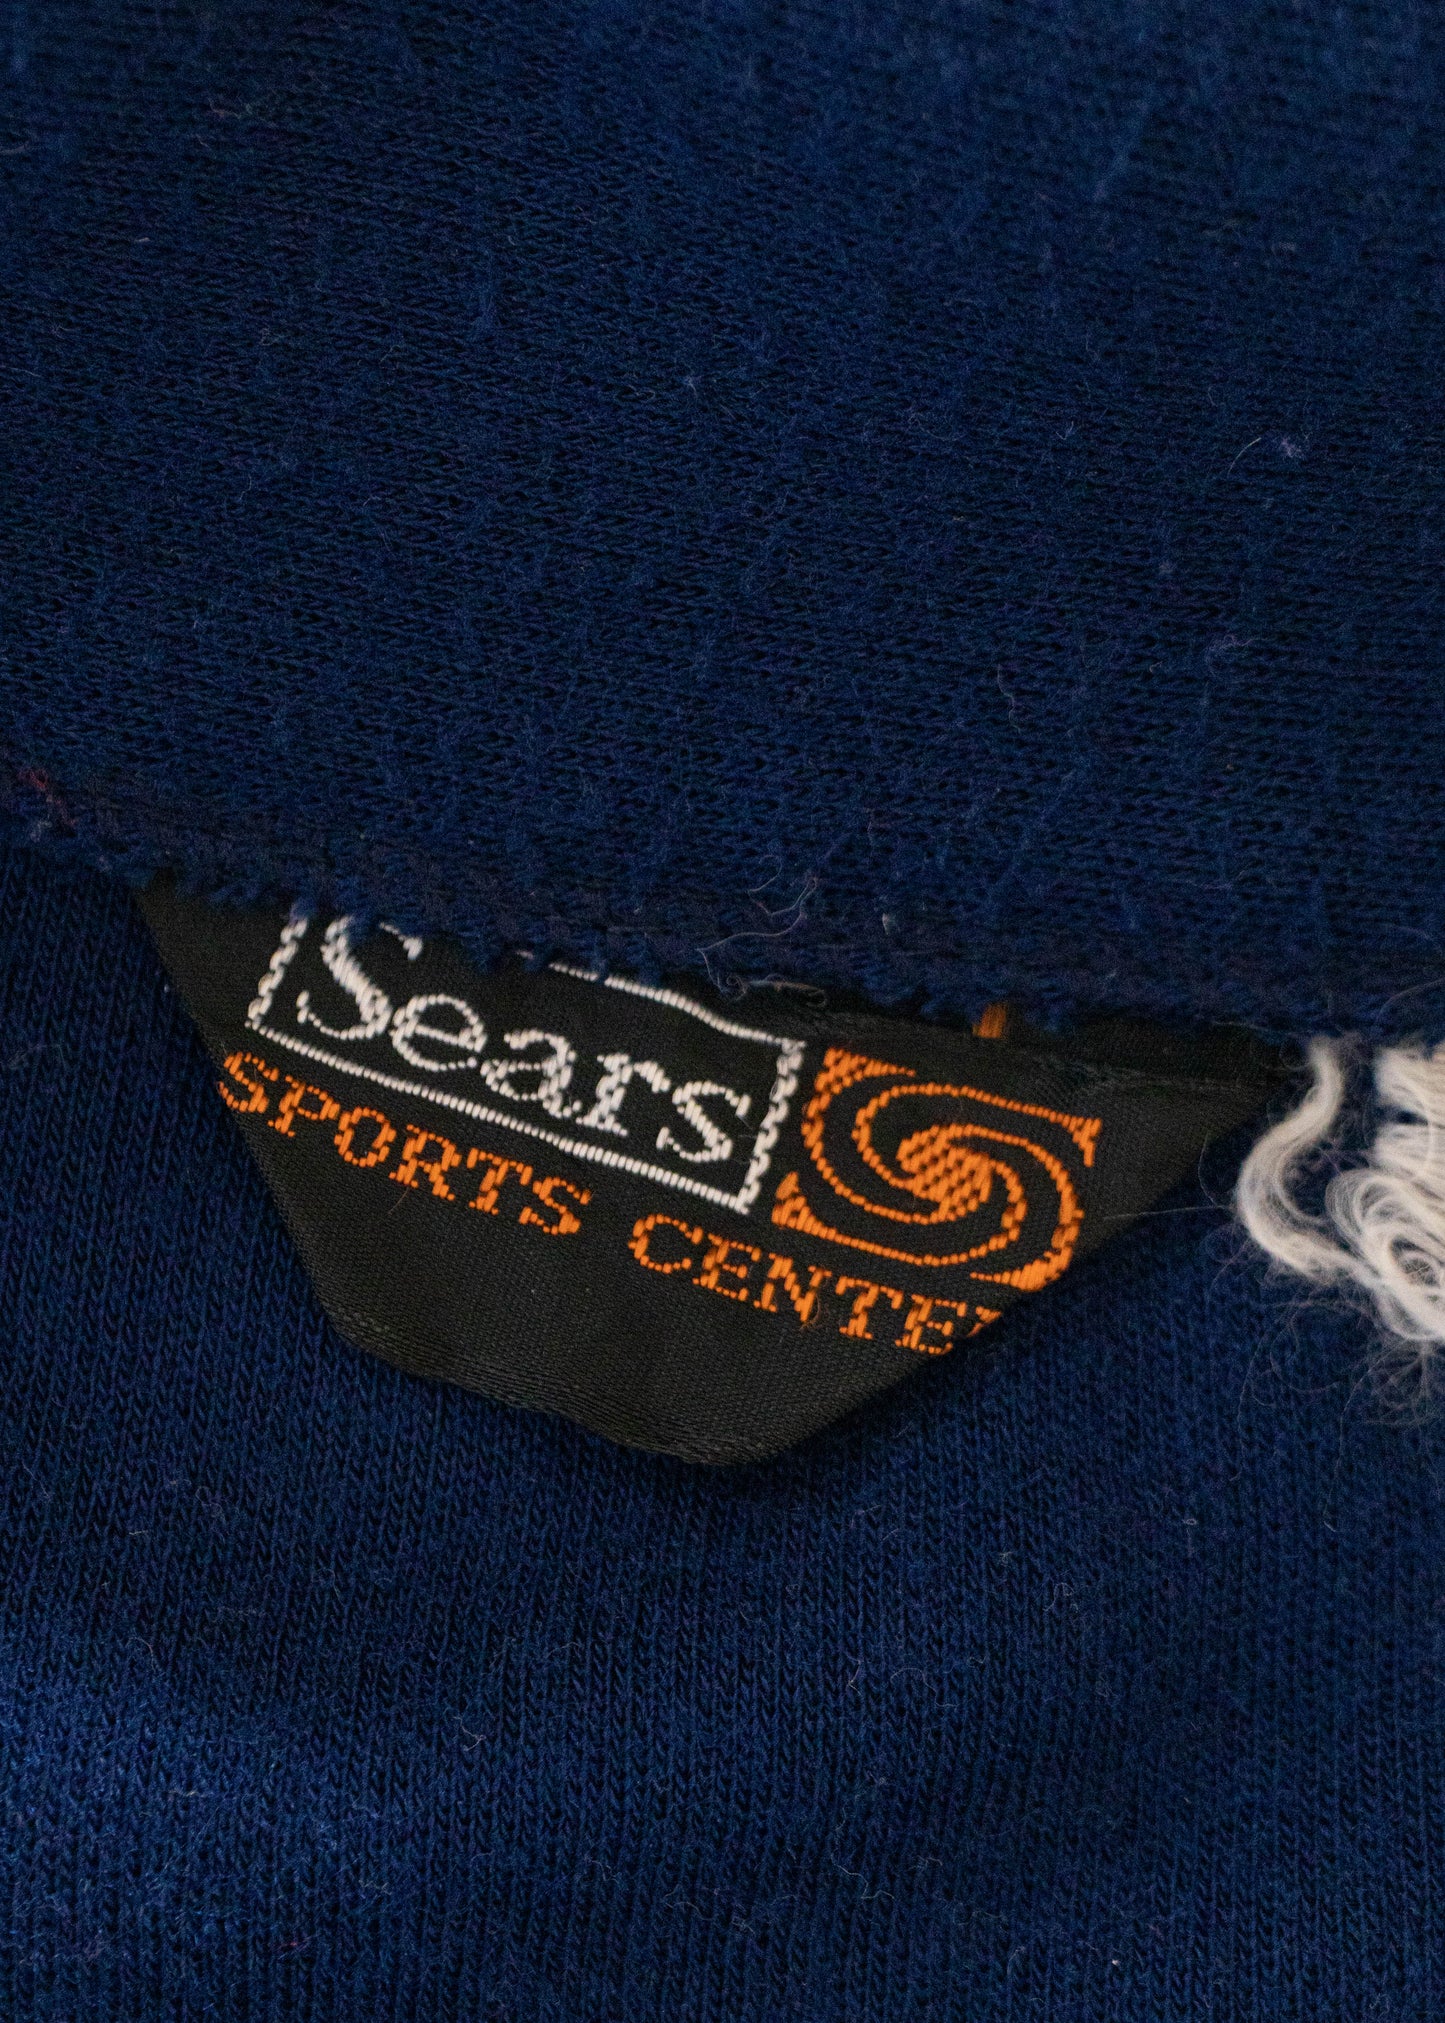 1970s Sears Track Jacket Size L/XL